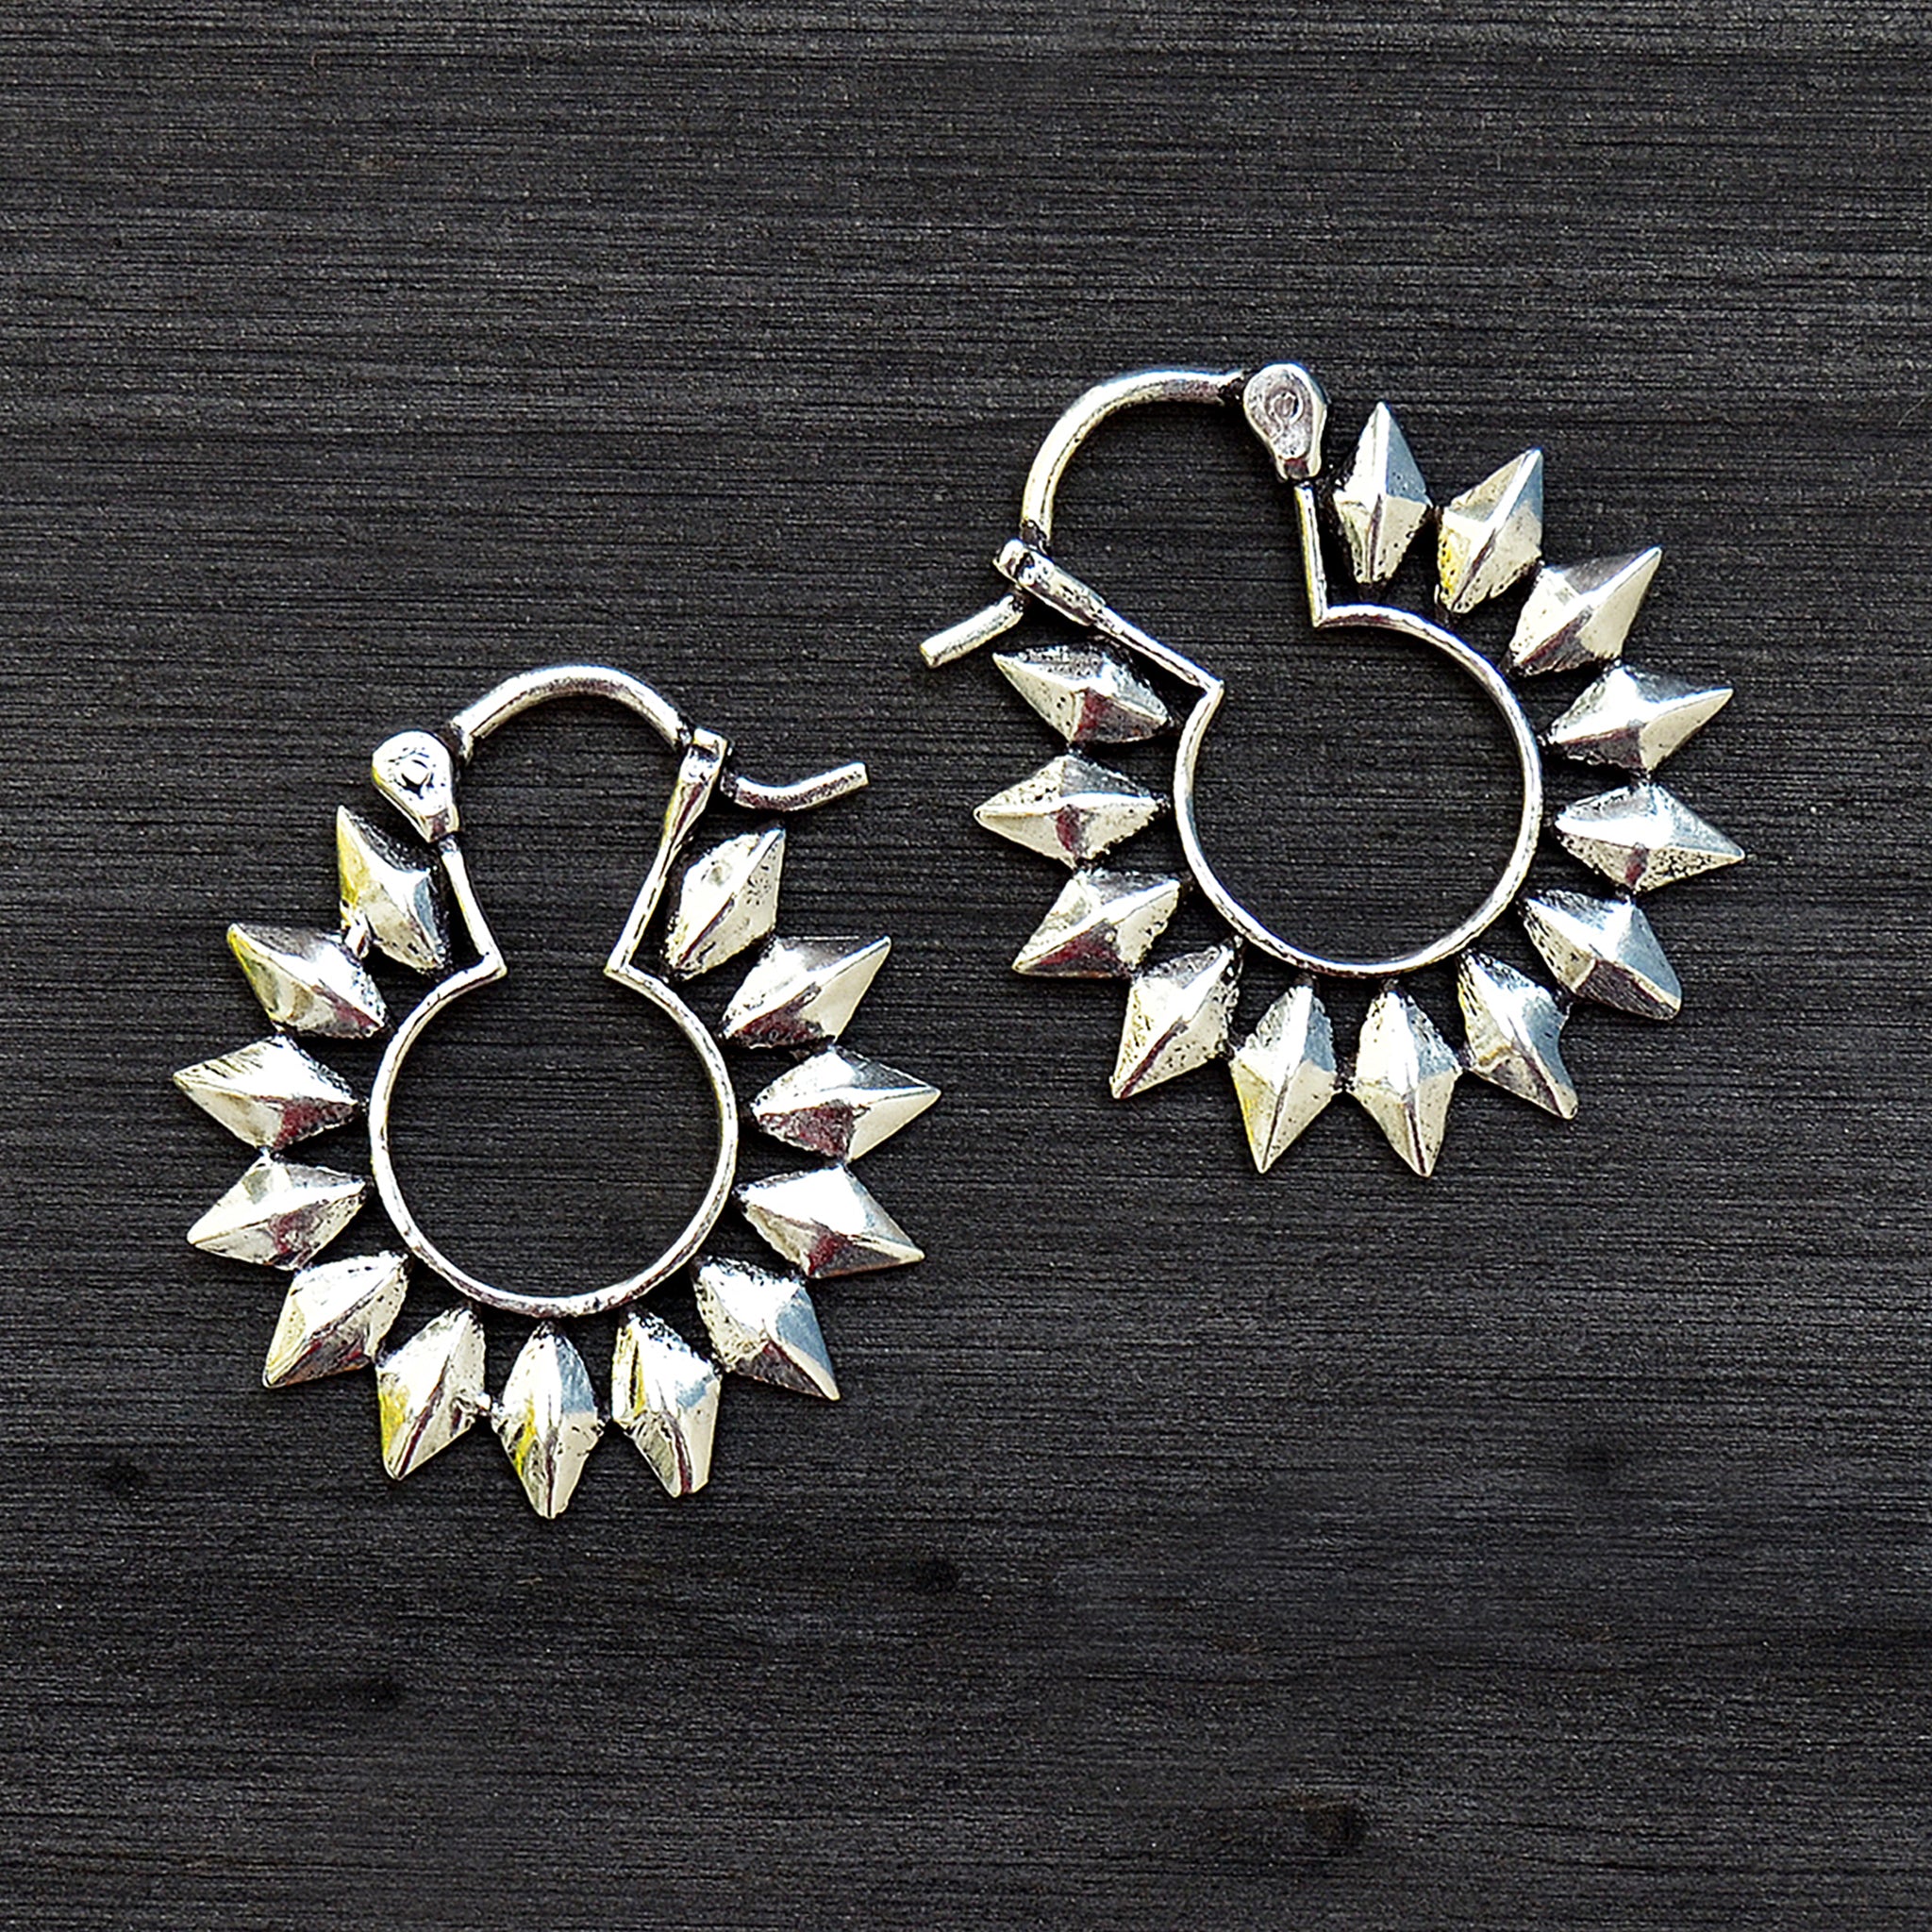 Small silver sun hoop earrings on black background